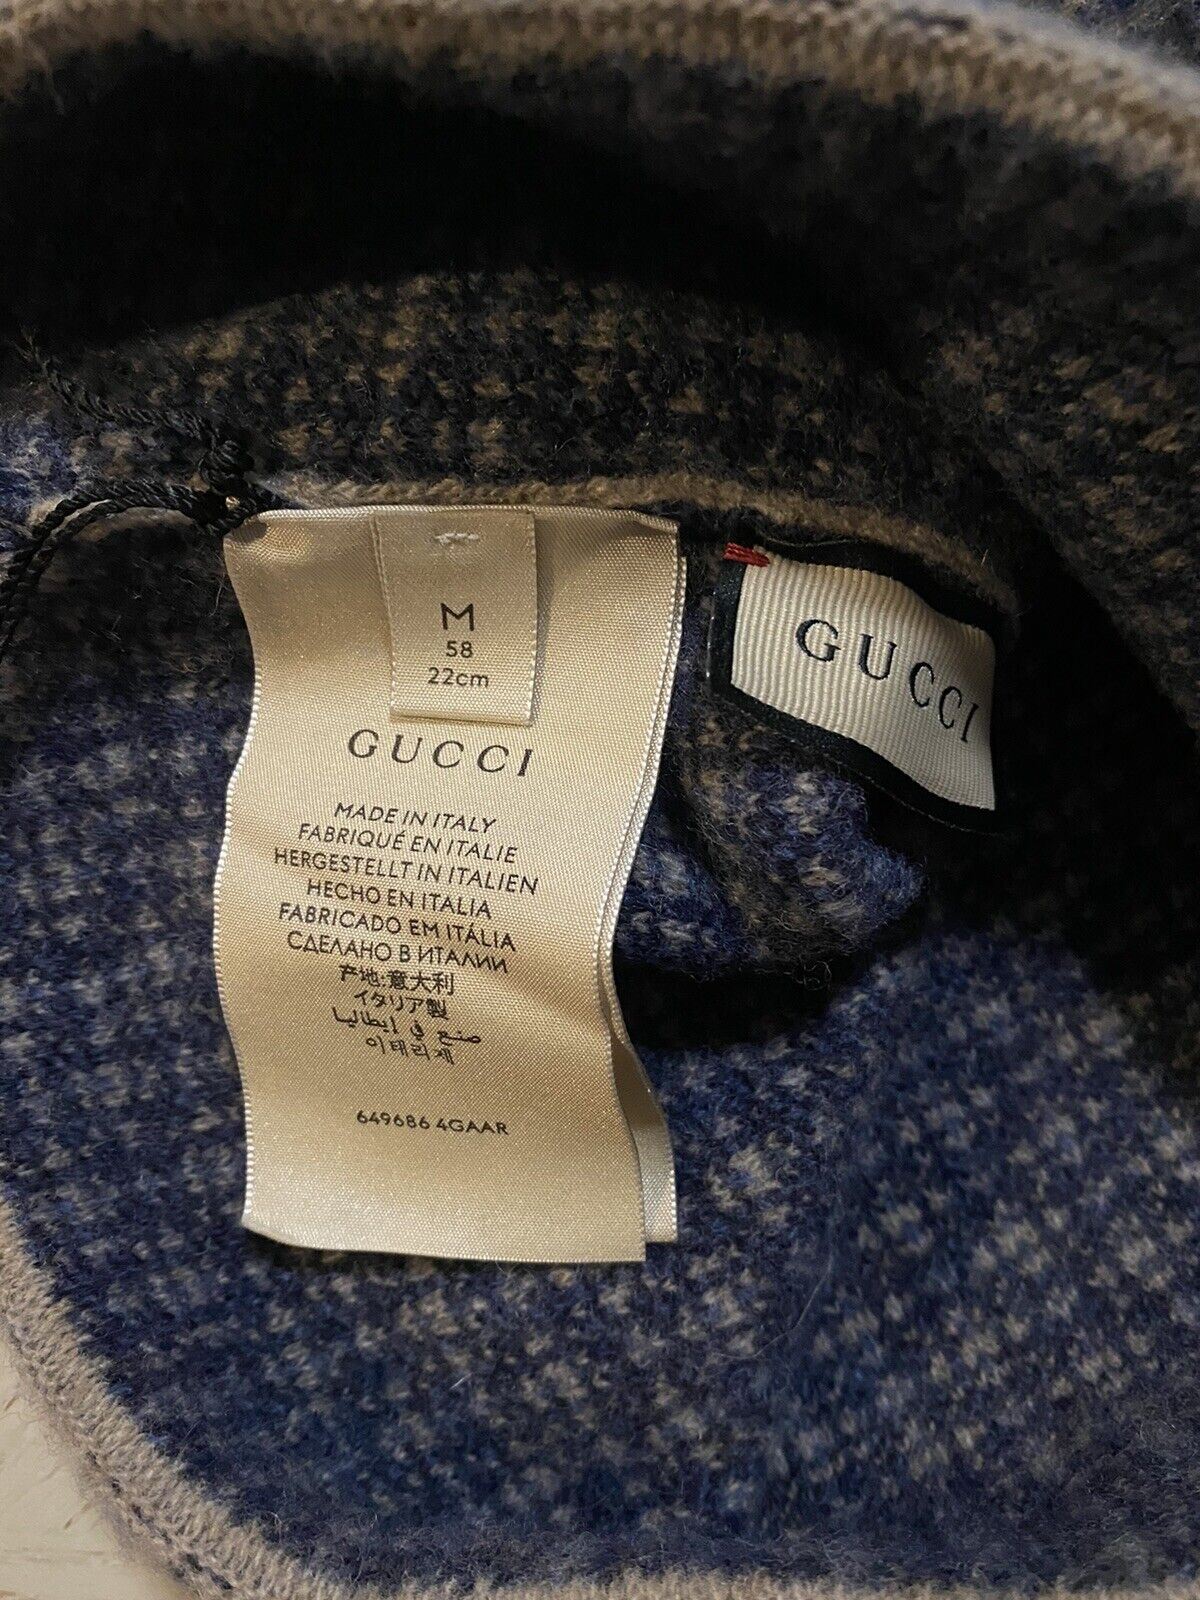 NWT Gucci Шапка-бини Gucci Monogram Hat Коричневый/Черный Размер M Италия